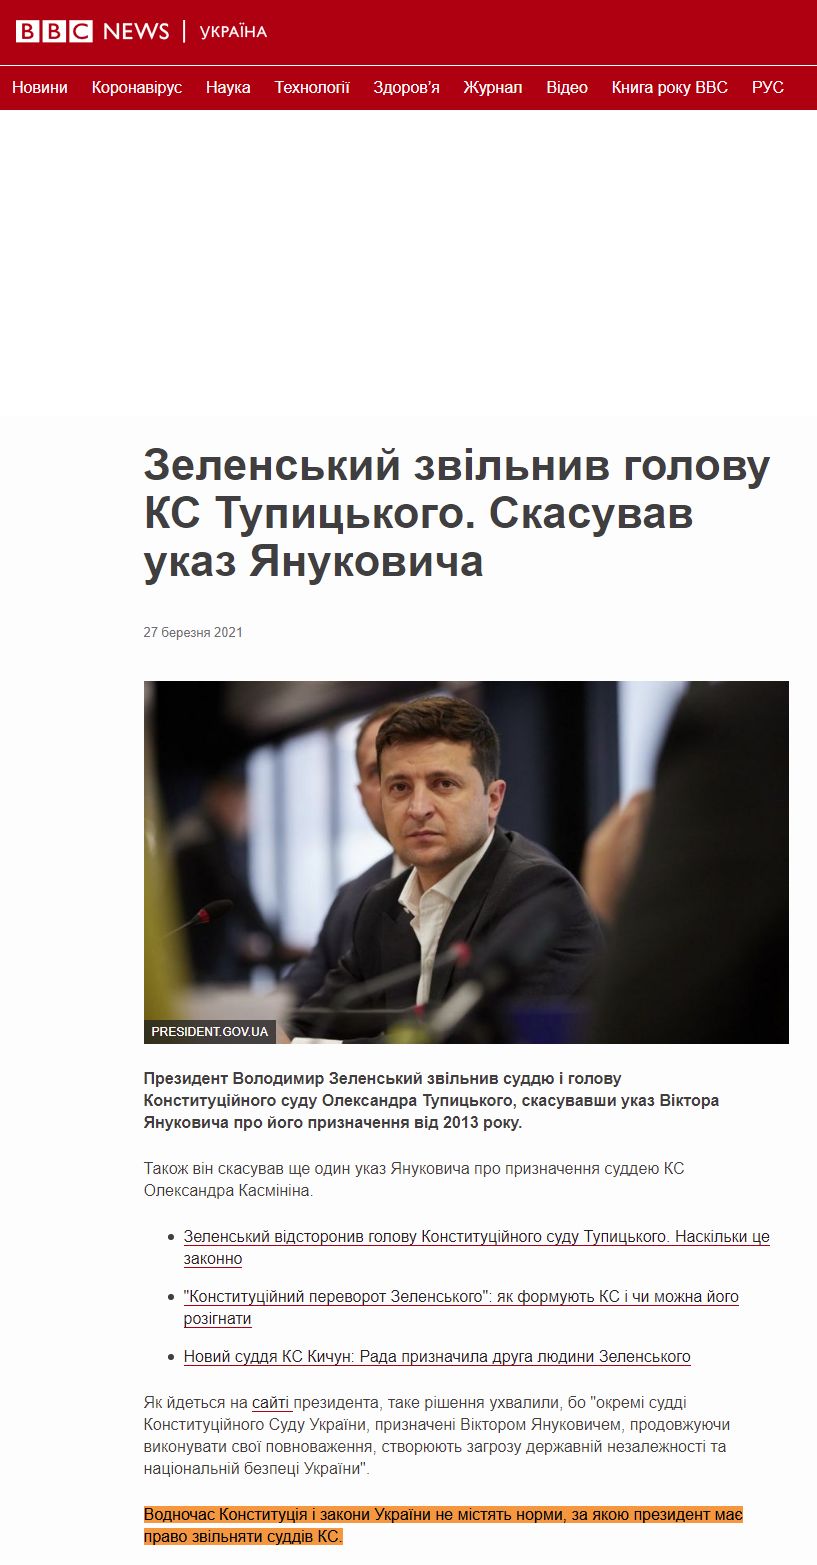 https://www.bbc.com/ukrainian/news-56548418